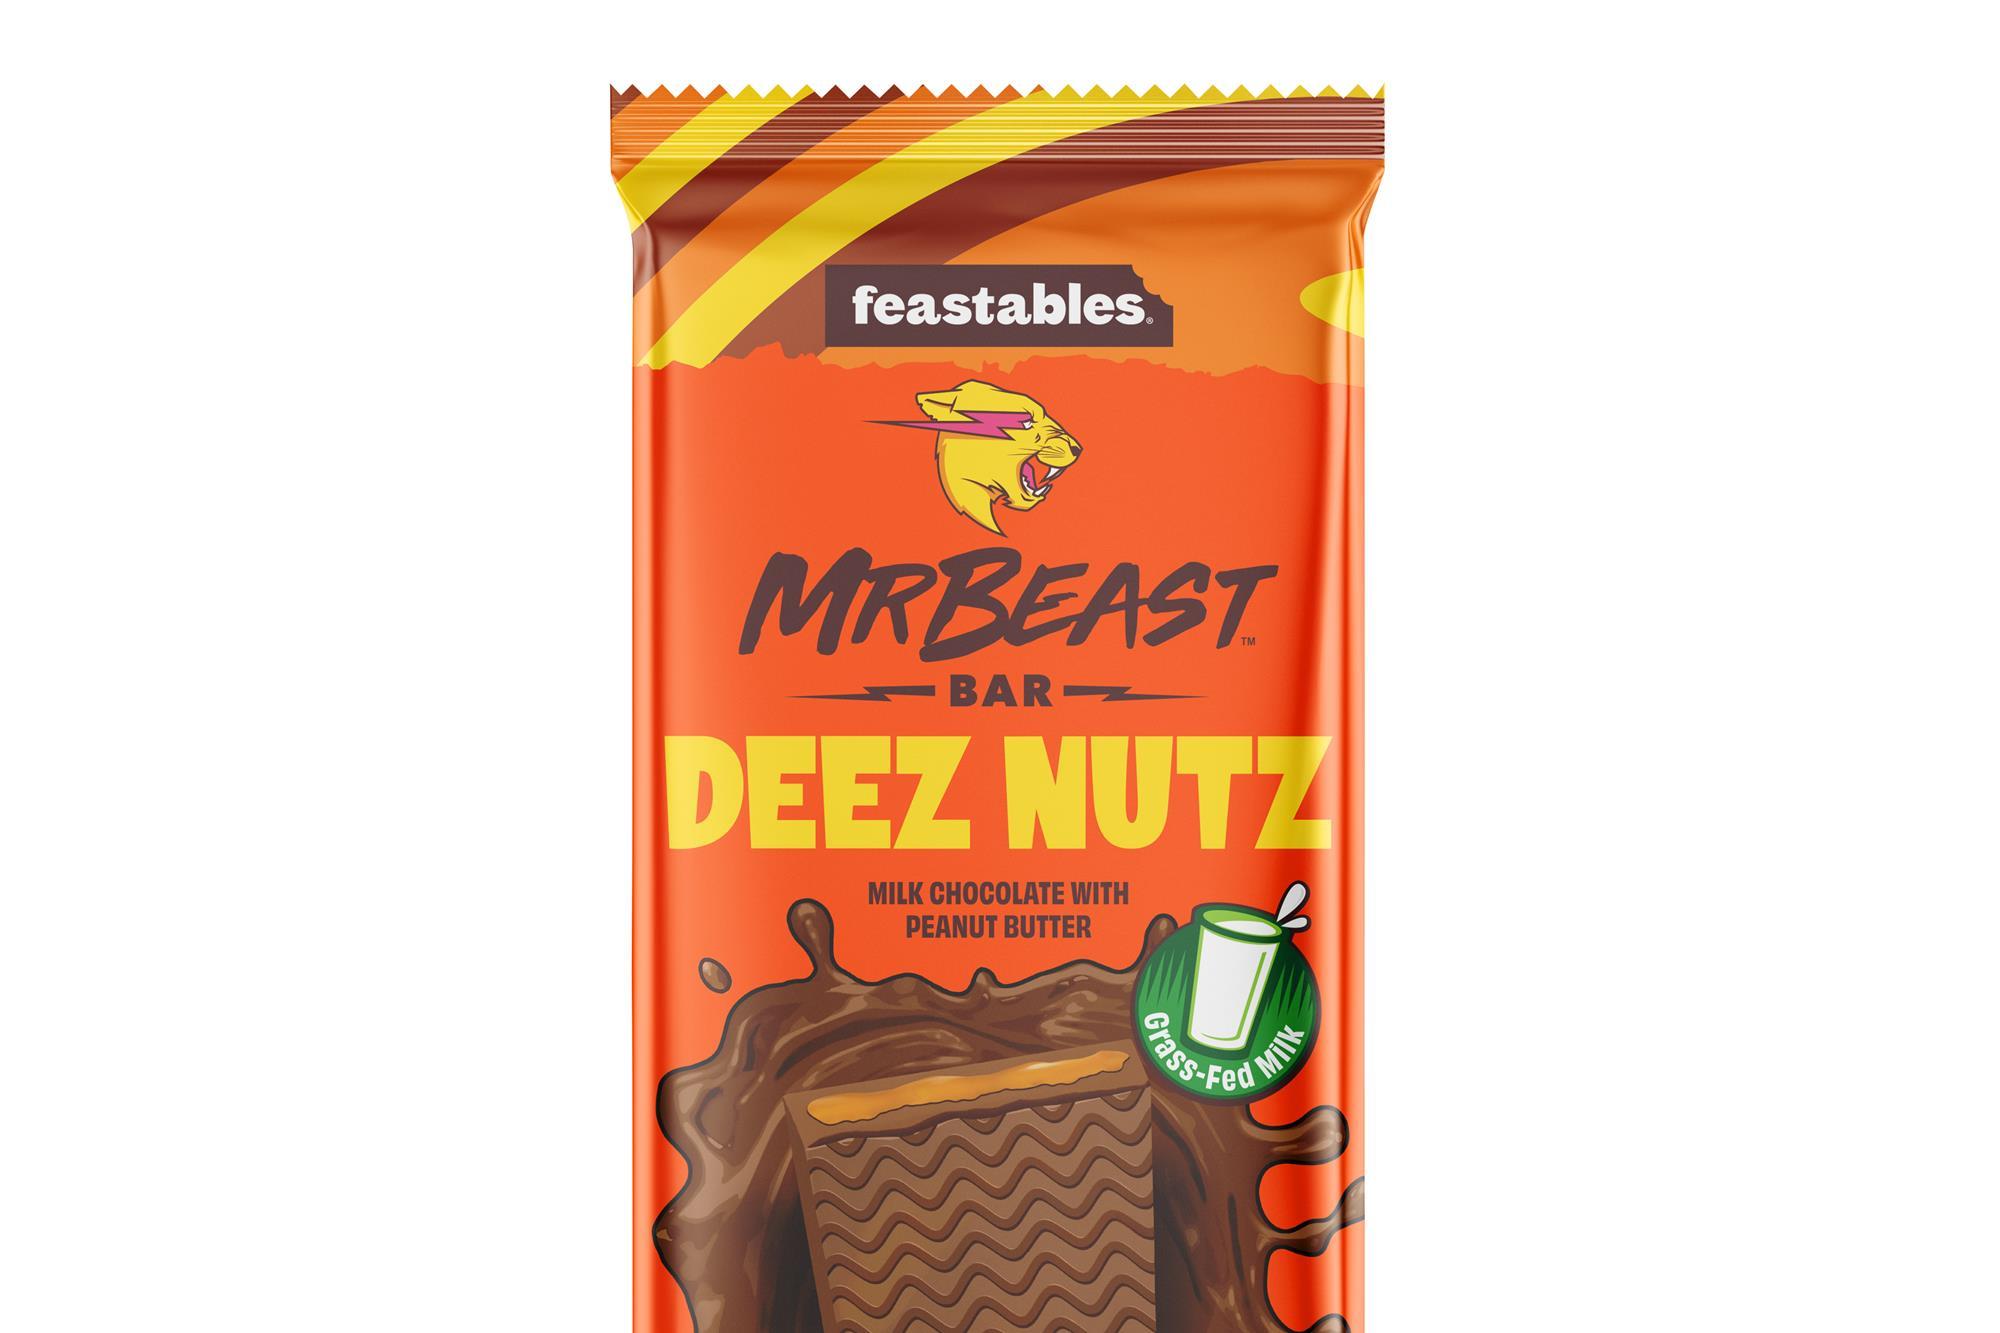 Mr Beast Bar Milk Chocolate